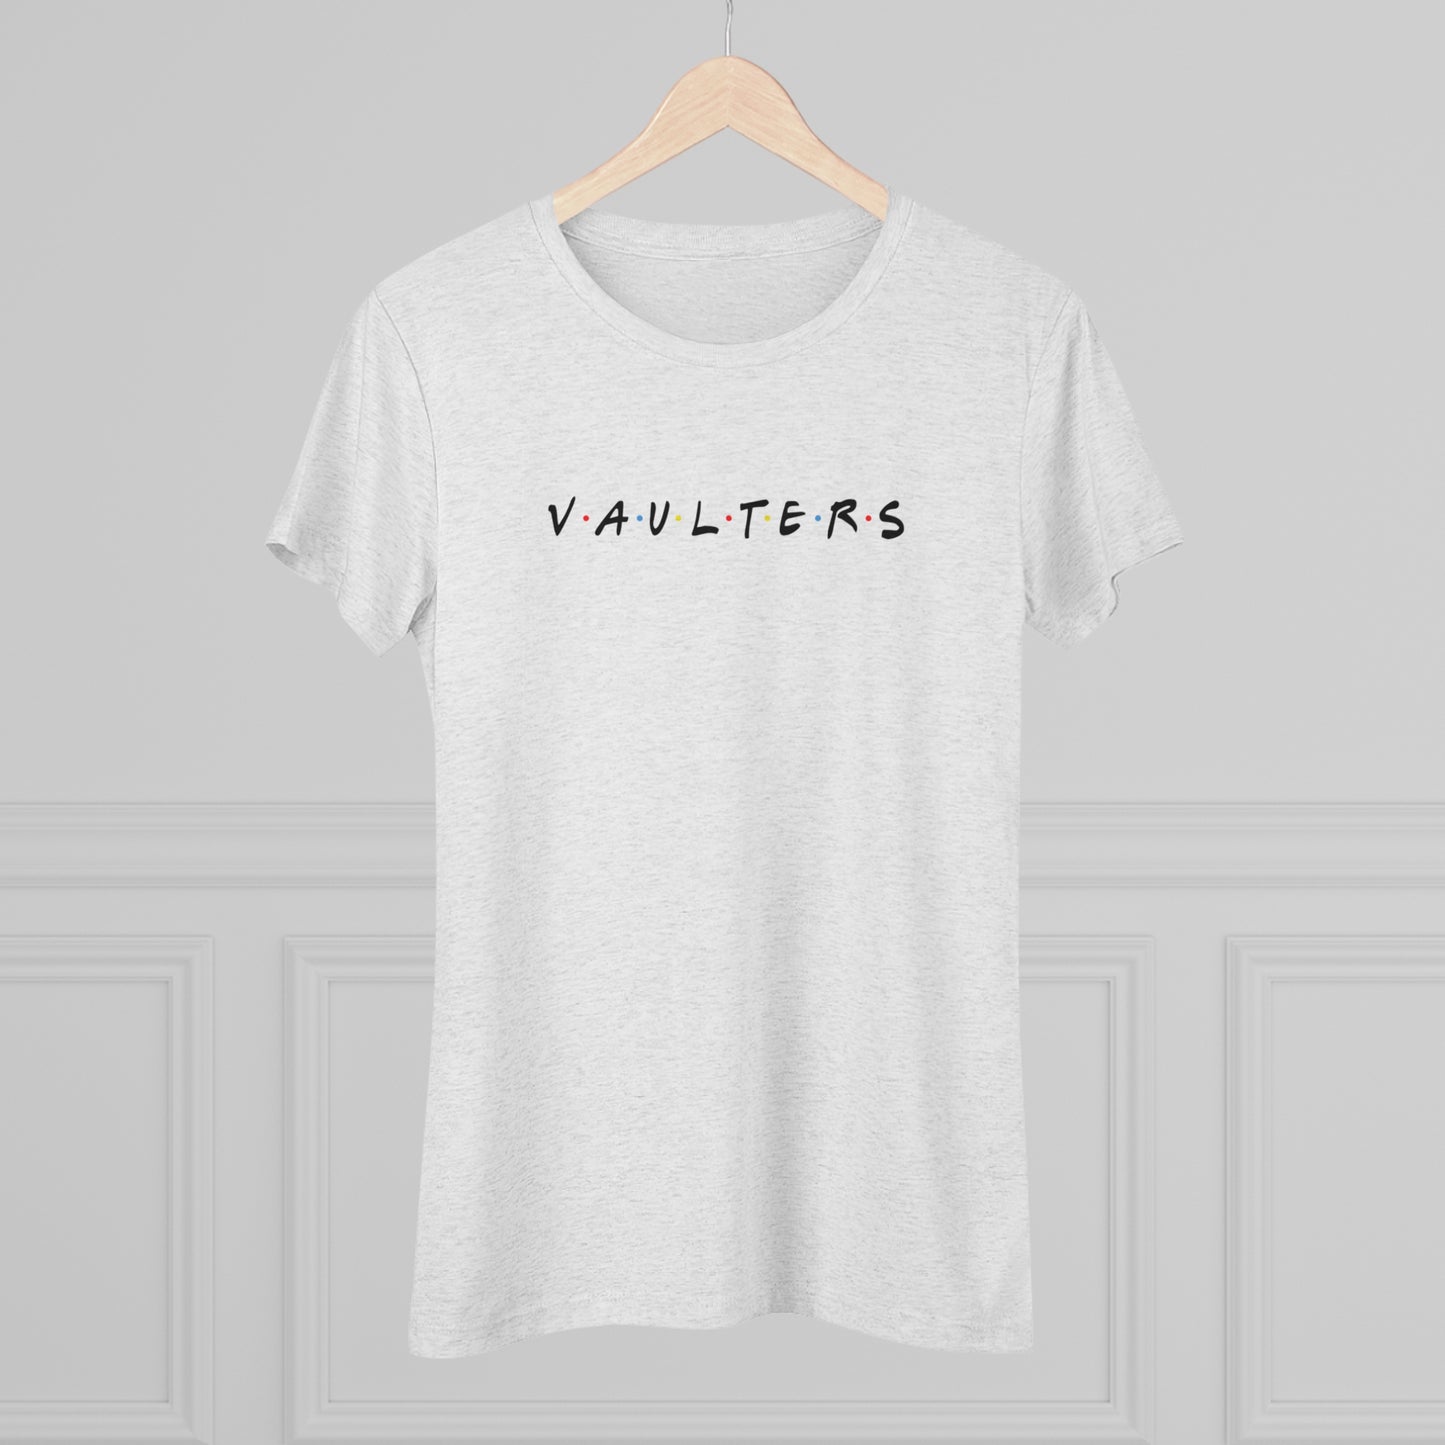 Vaulters - Women's Tri-Blend Tee